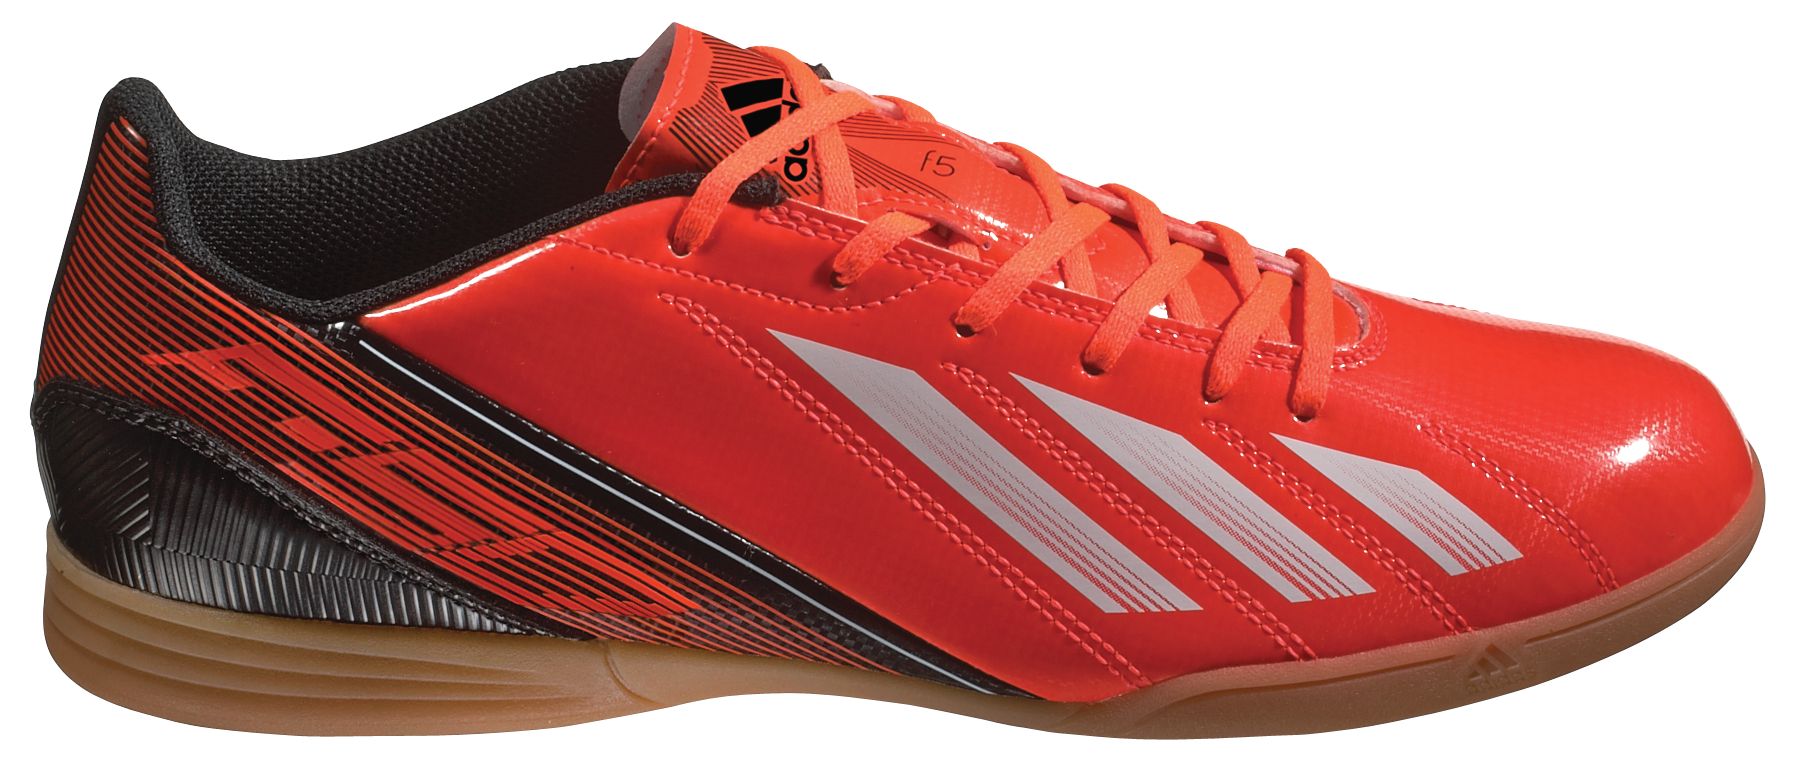 adidas Men's F5 Indoor Soccer Shoes